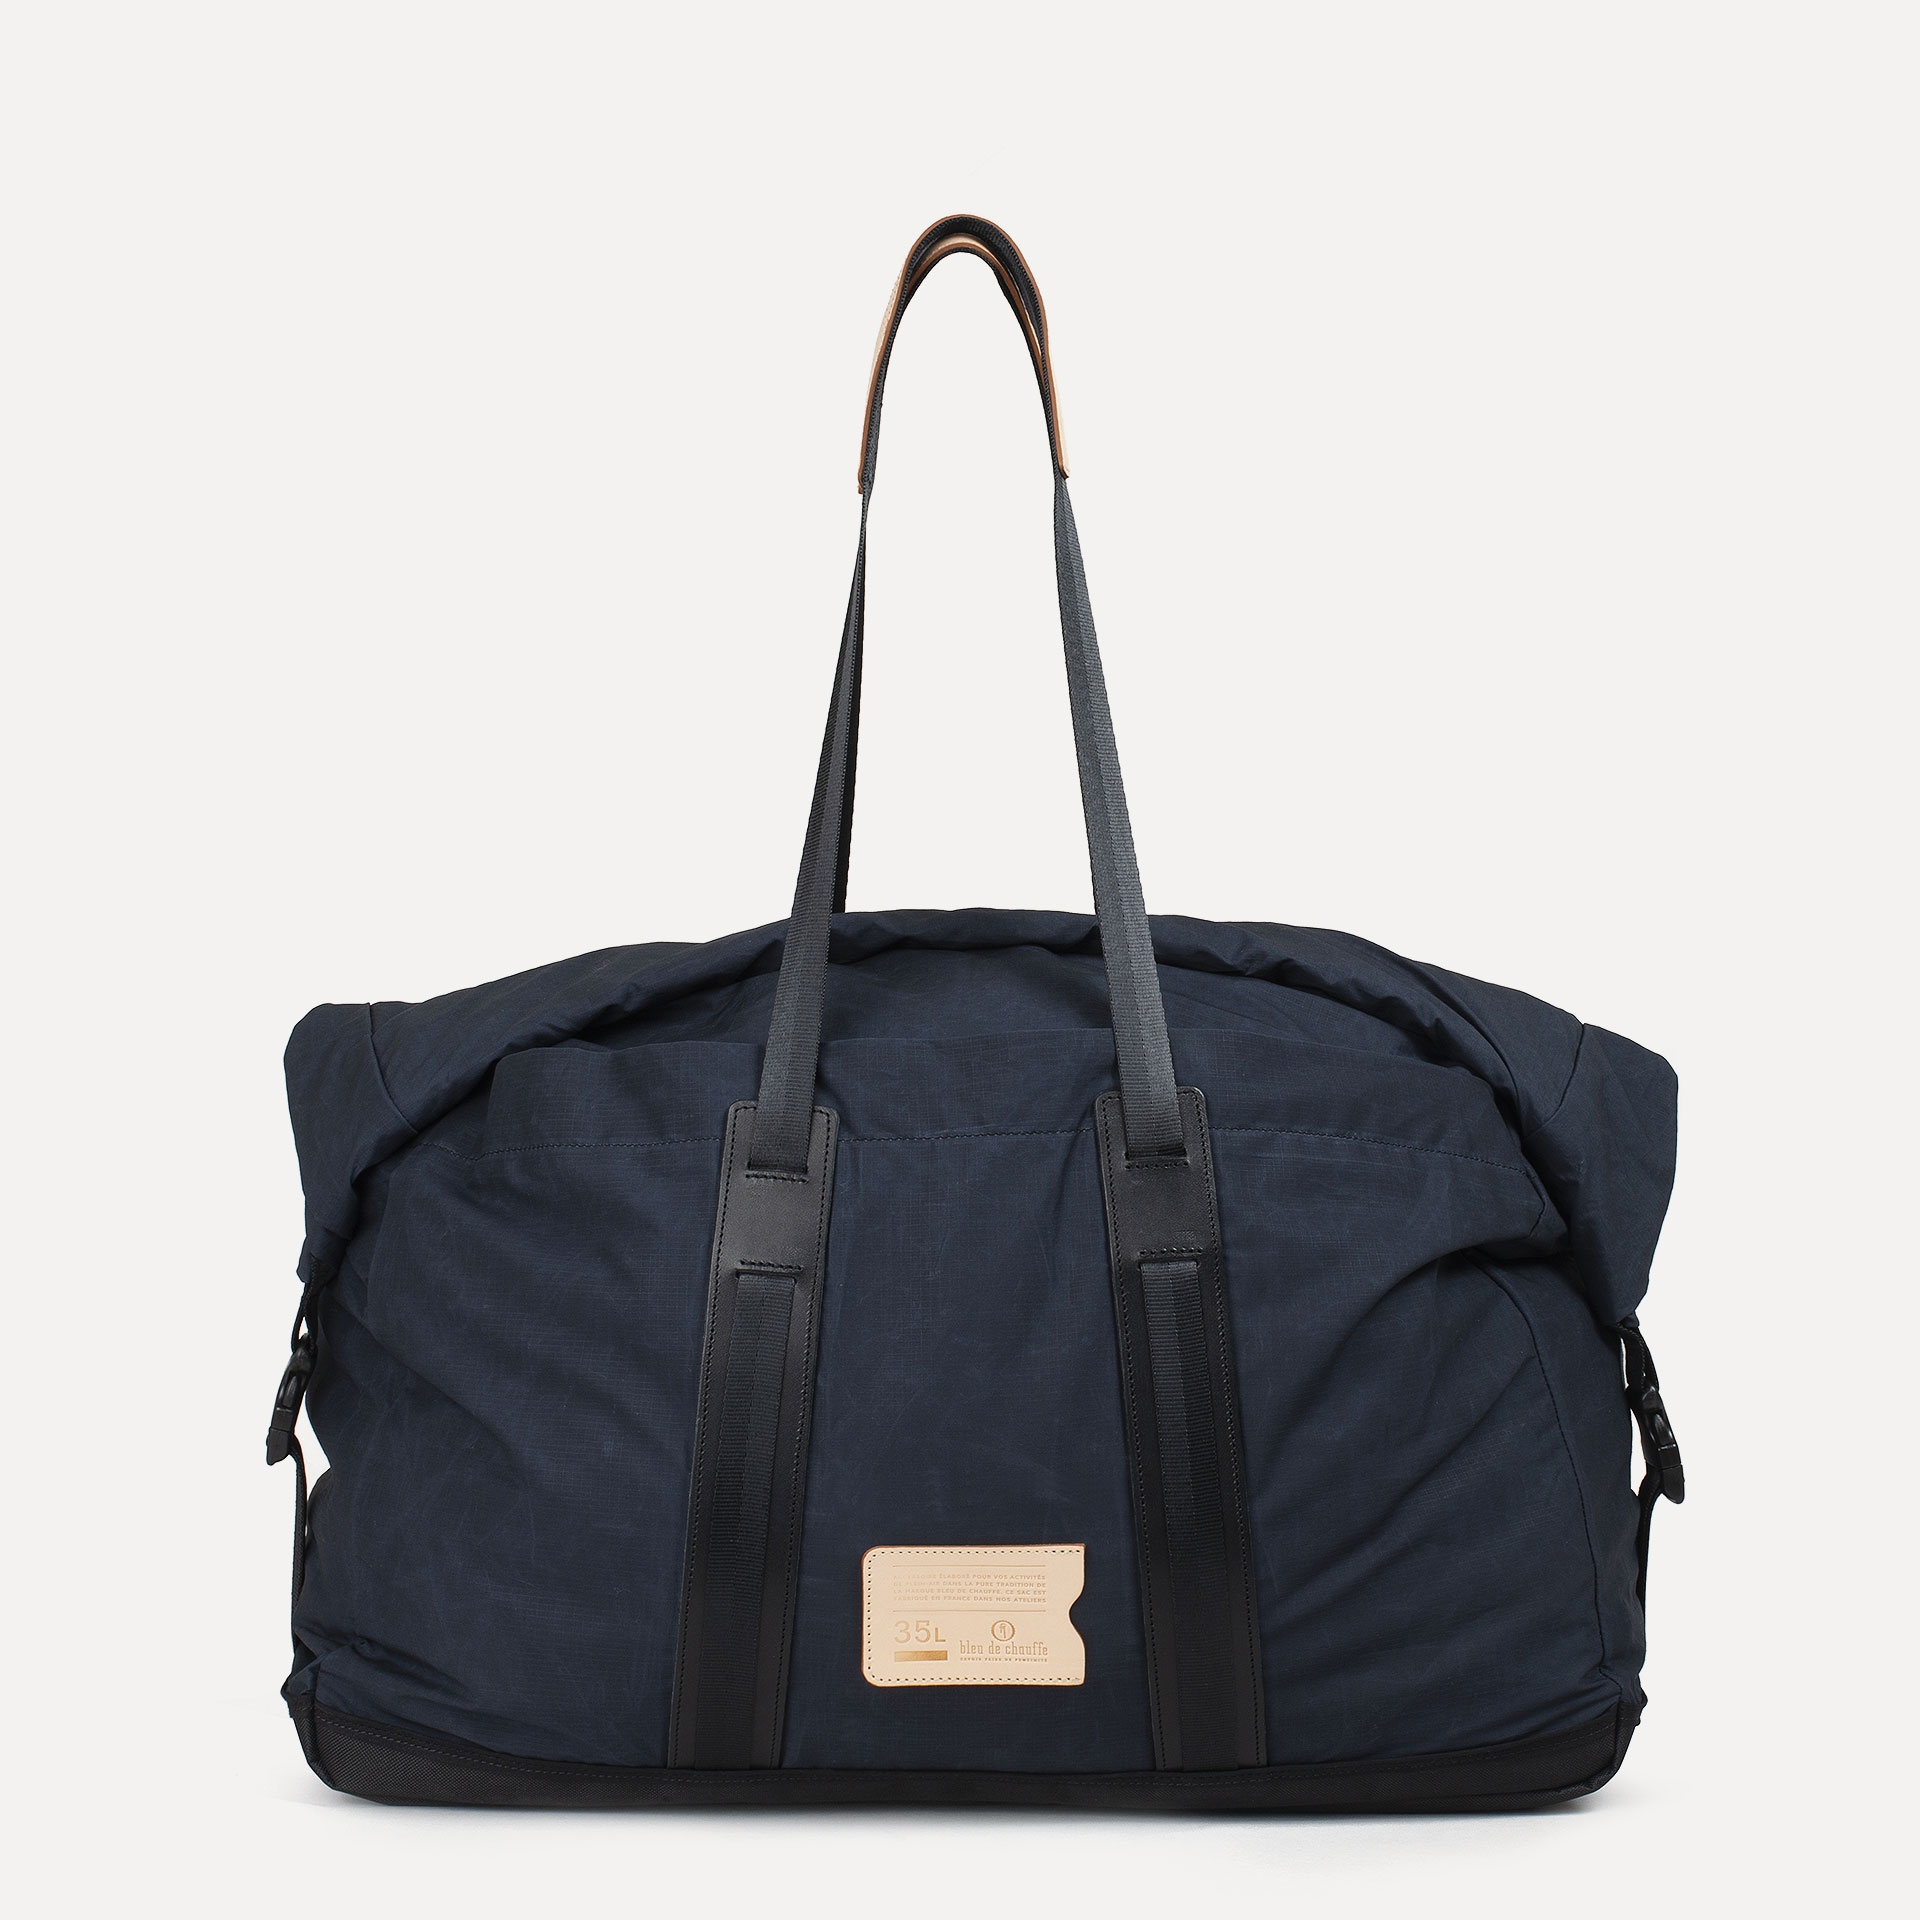 35L Baroud Travel bag - Hague Blue (image n°1)